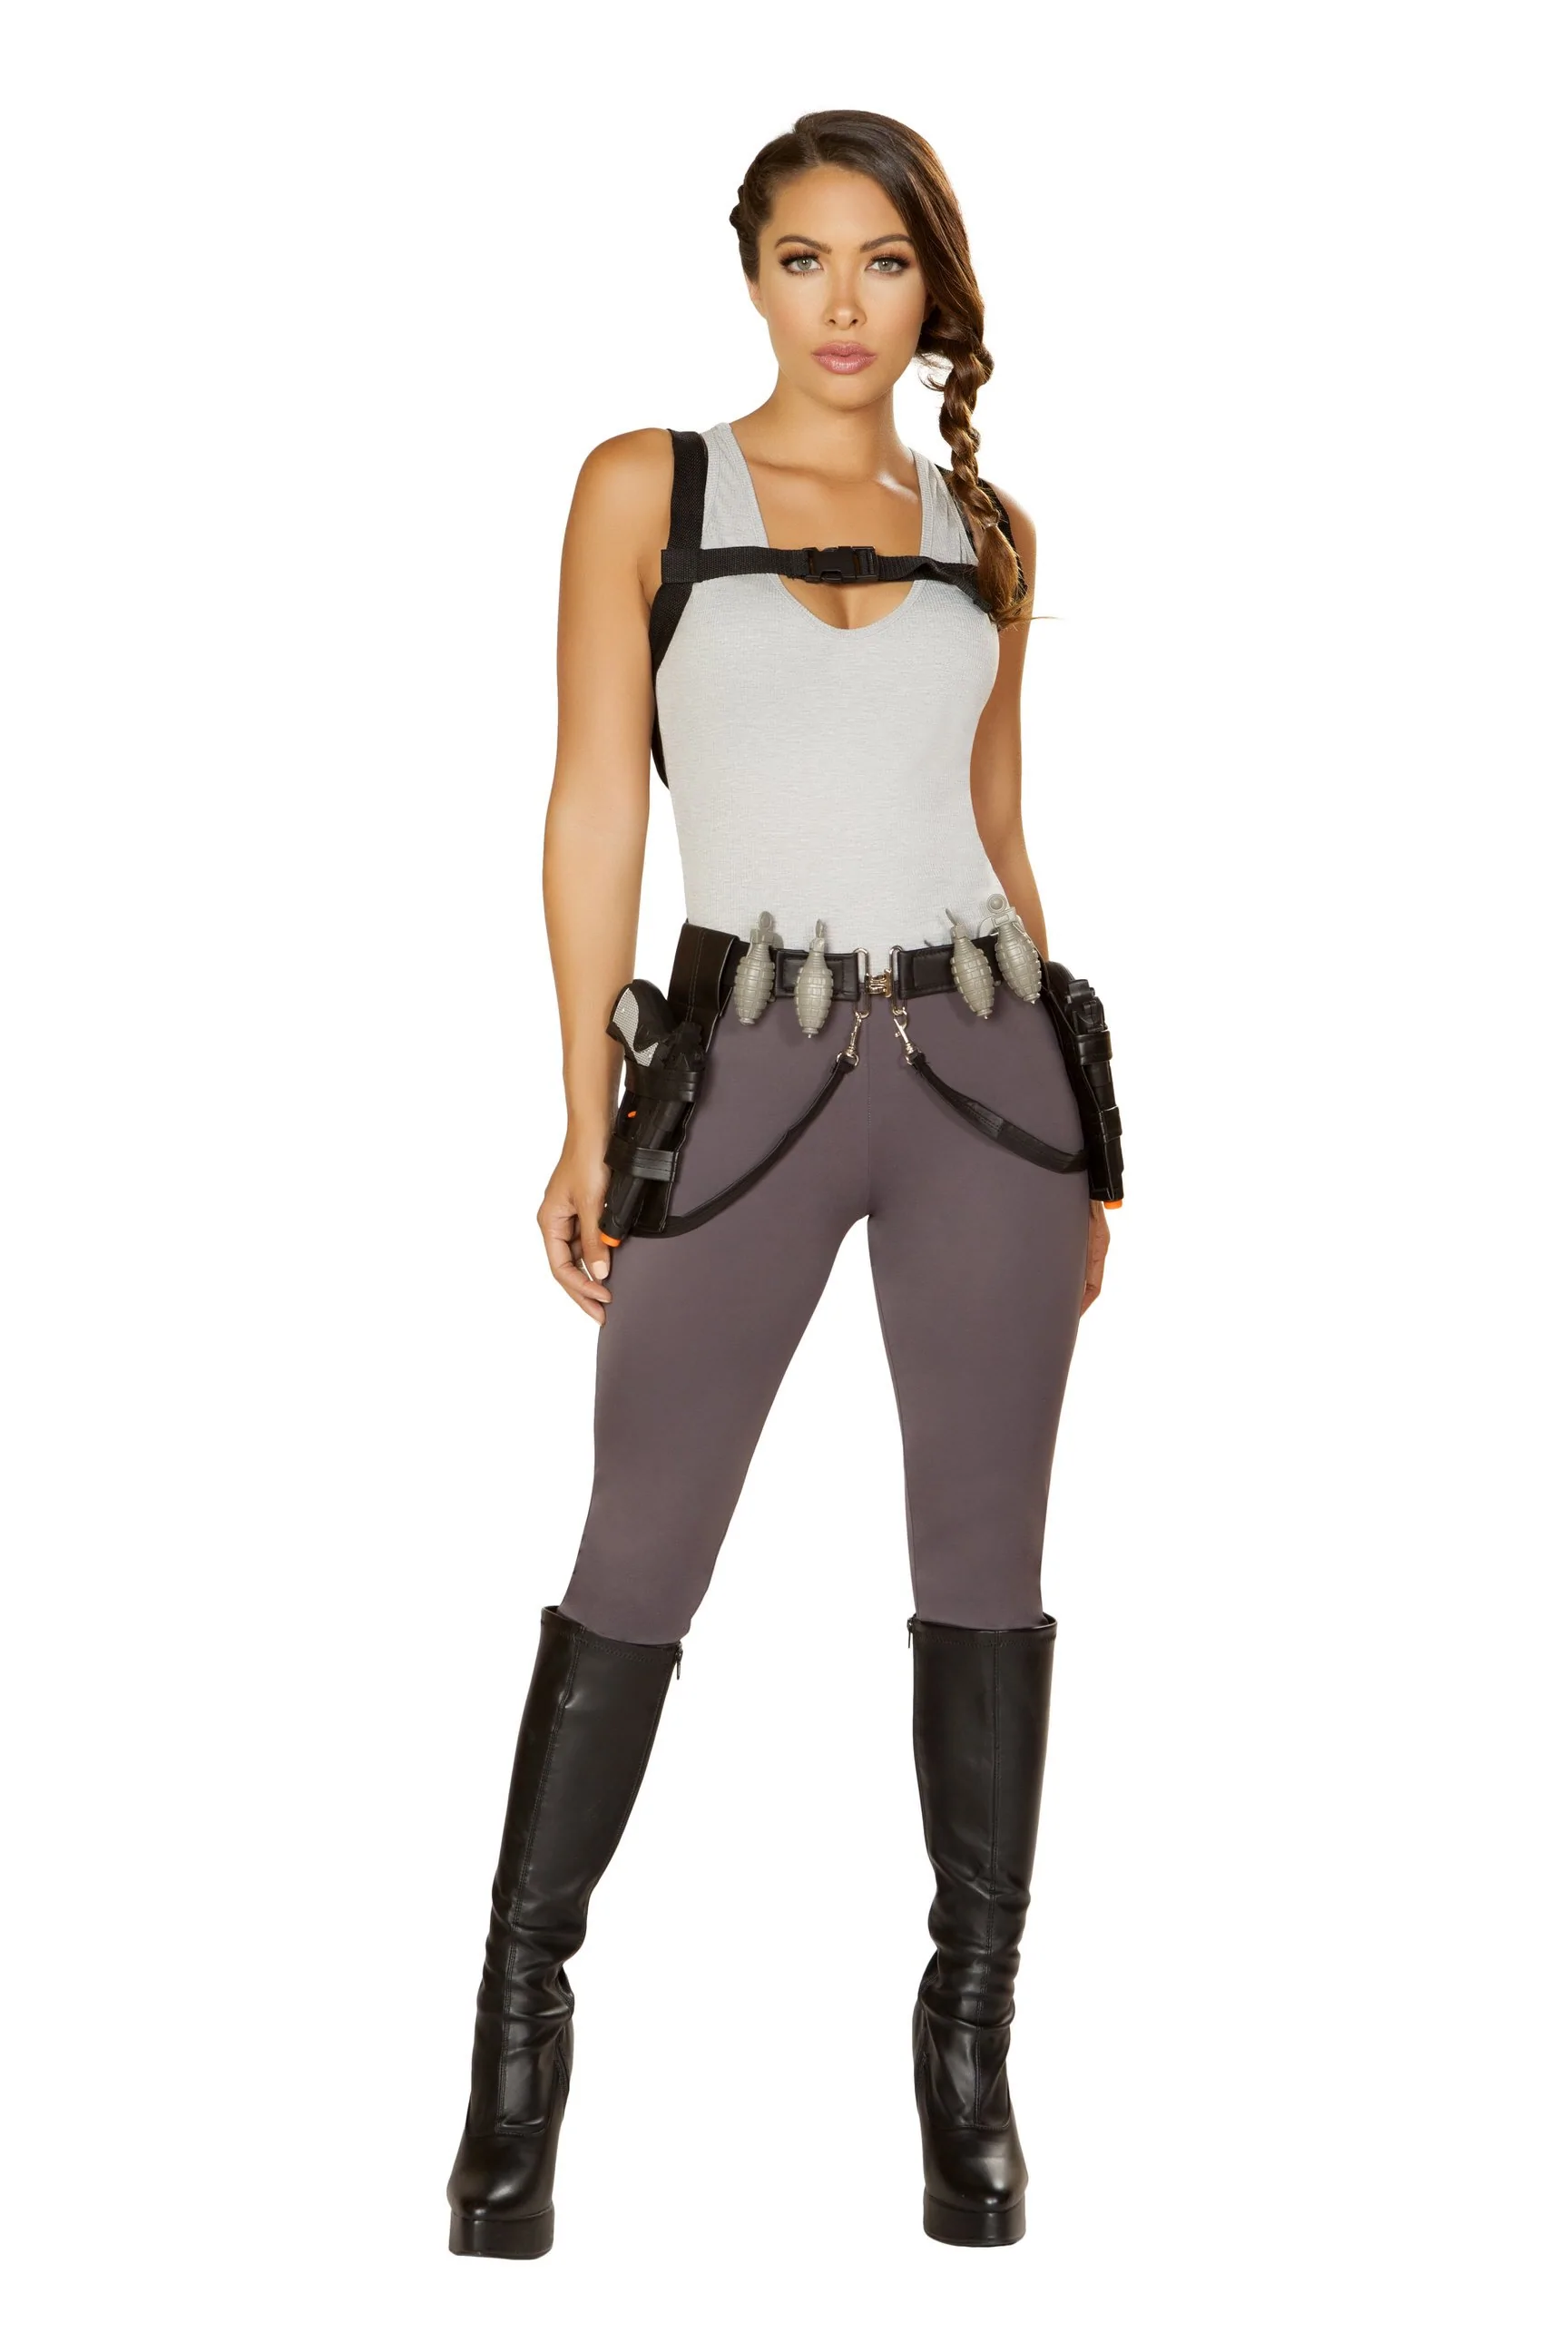 5PC Lara Croft Costume for Women